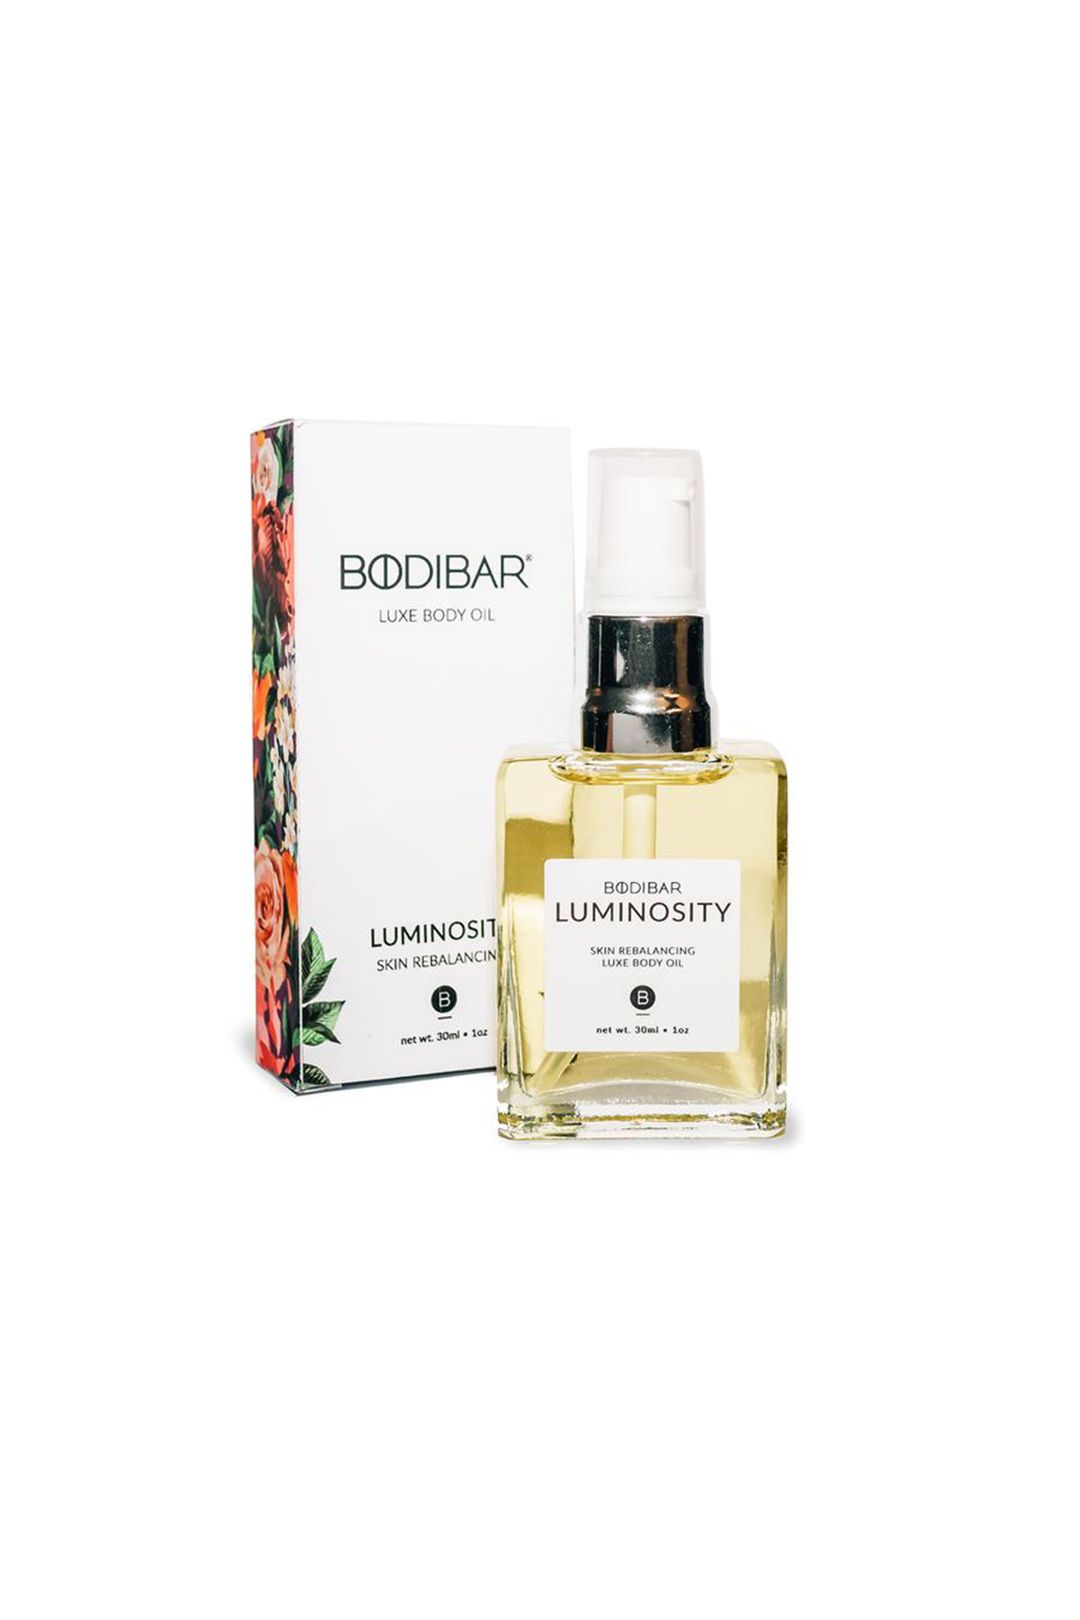 bodibar-luminosity-skin-rebalancing-luxe-body-oil